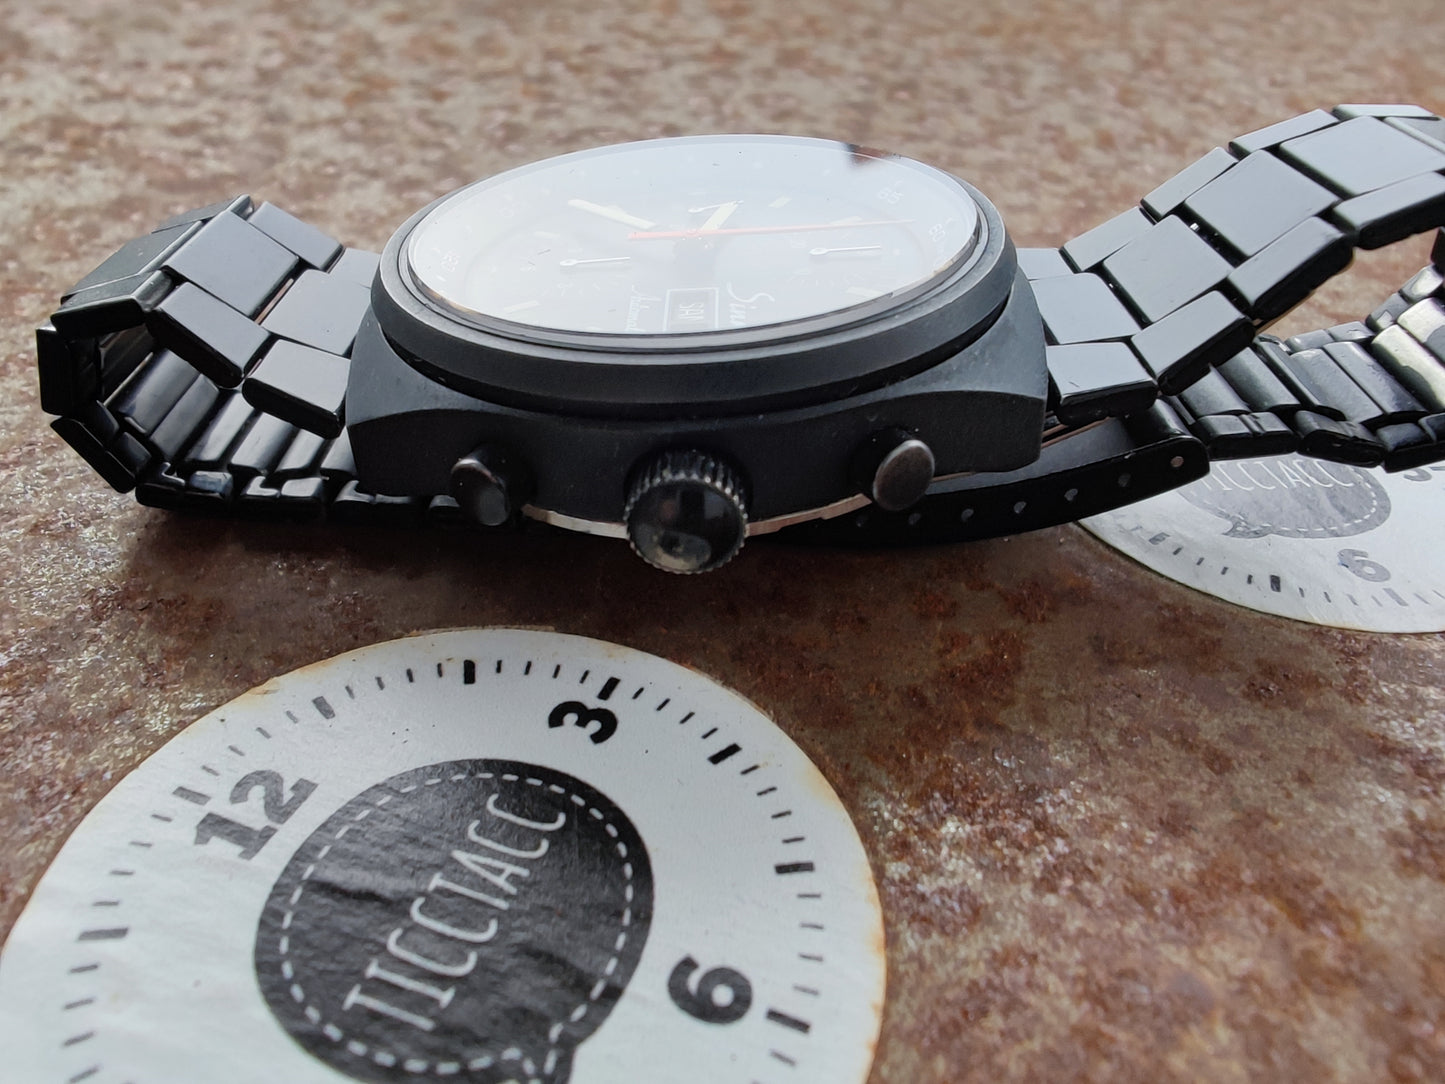 SINN 144 Black PVD Tritium & PVD plated bracelet